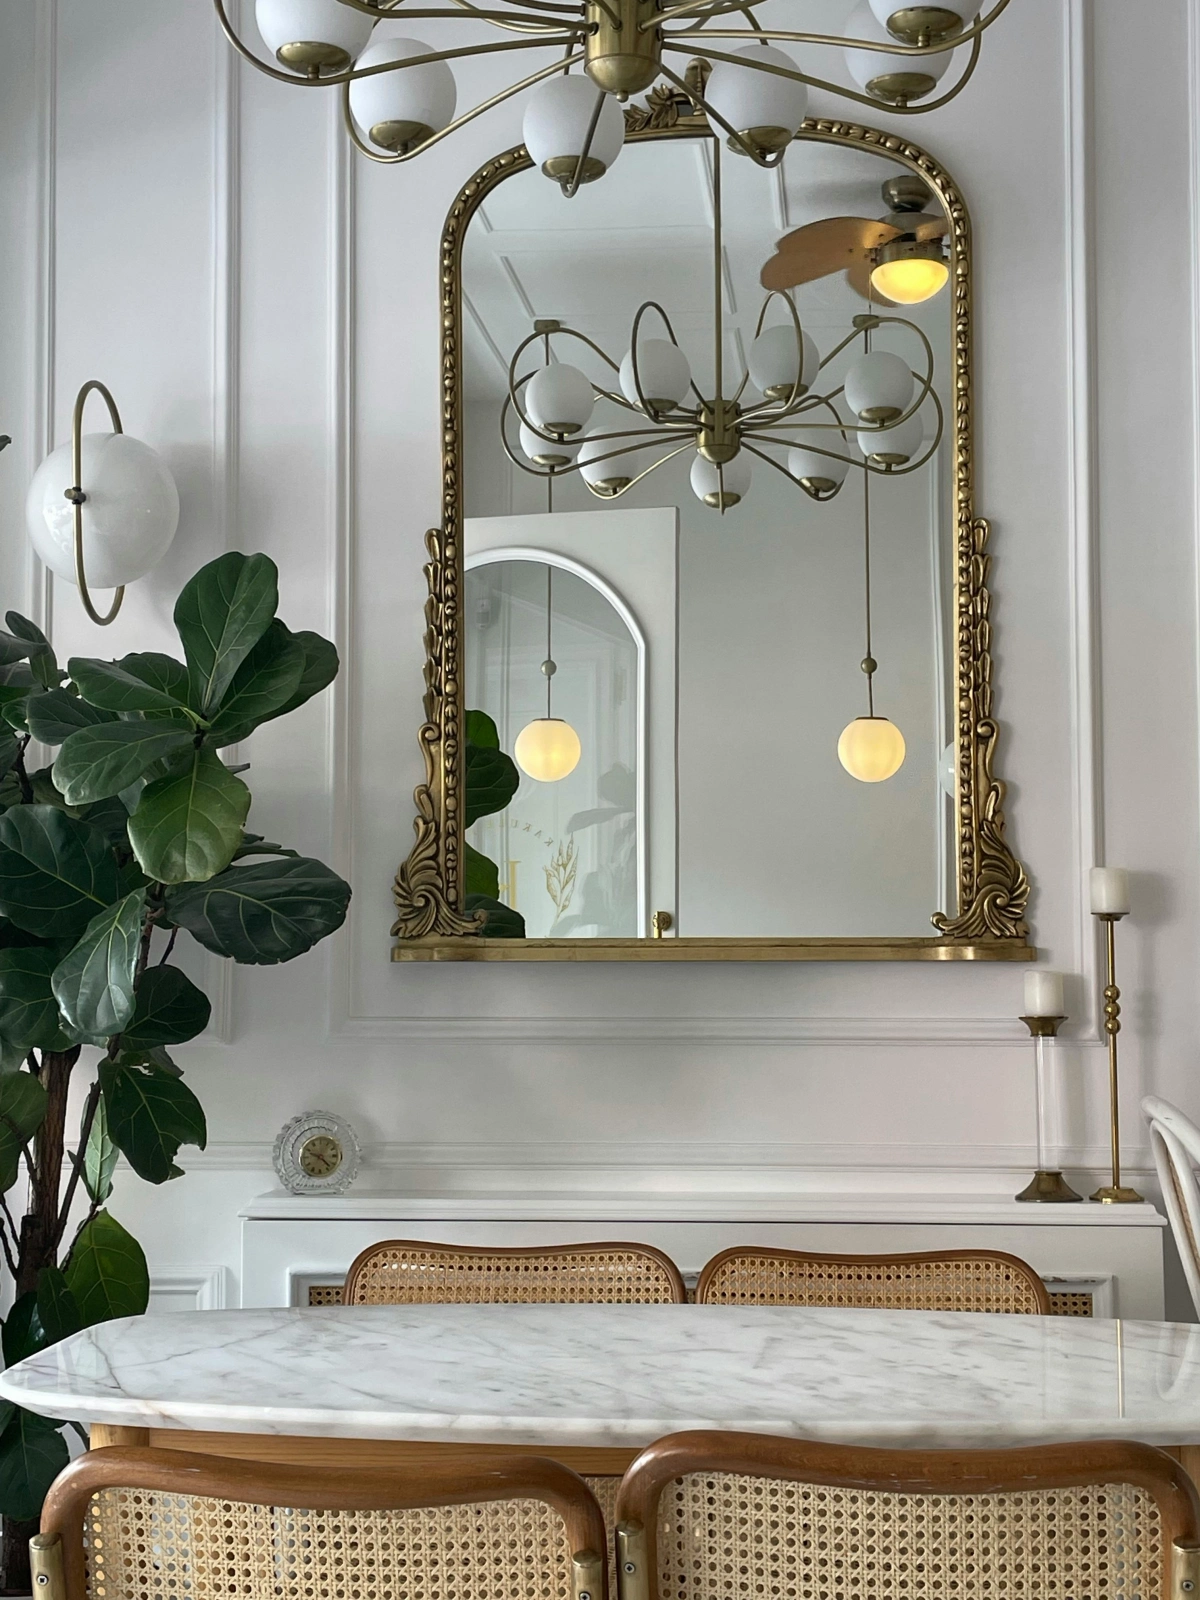 miroir cadre or lustre plante verte table manger marbre blanc chaises rotin